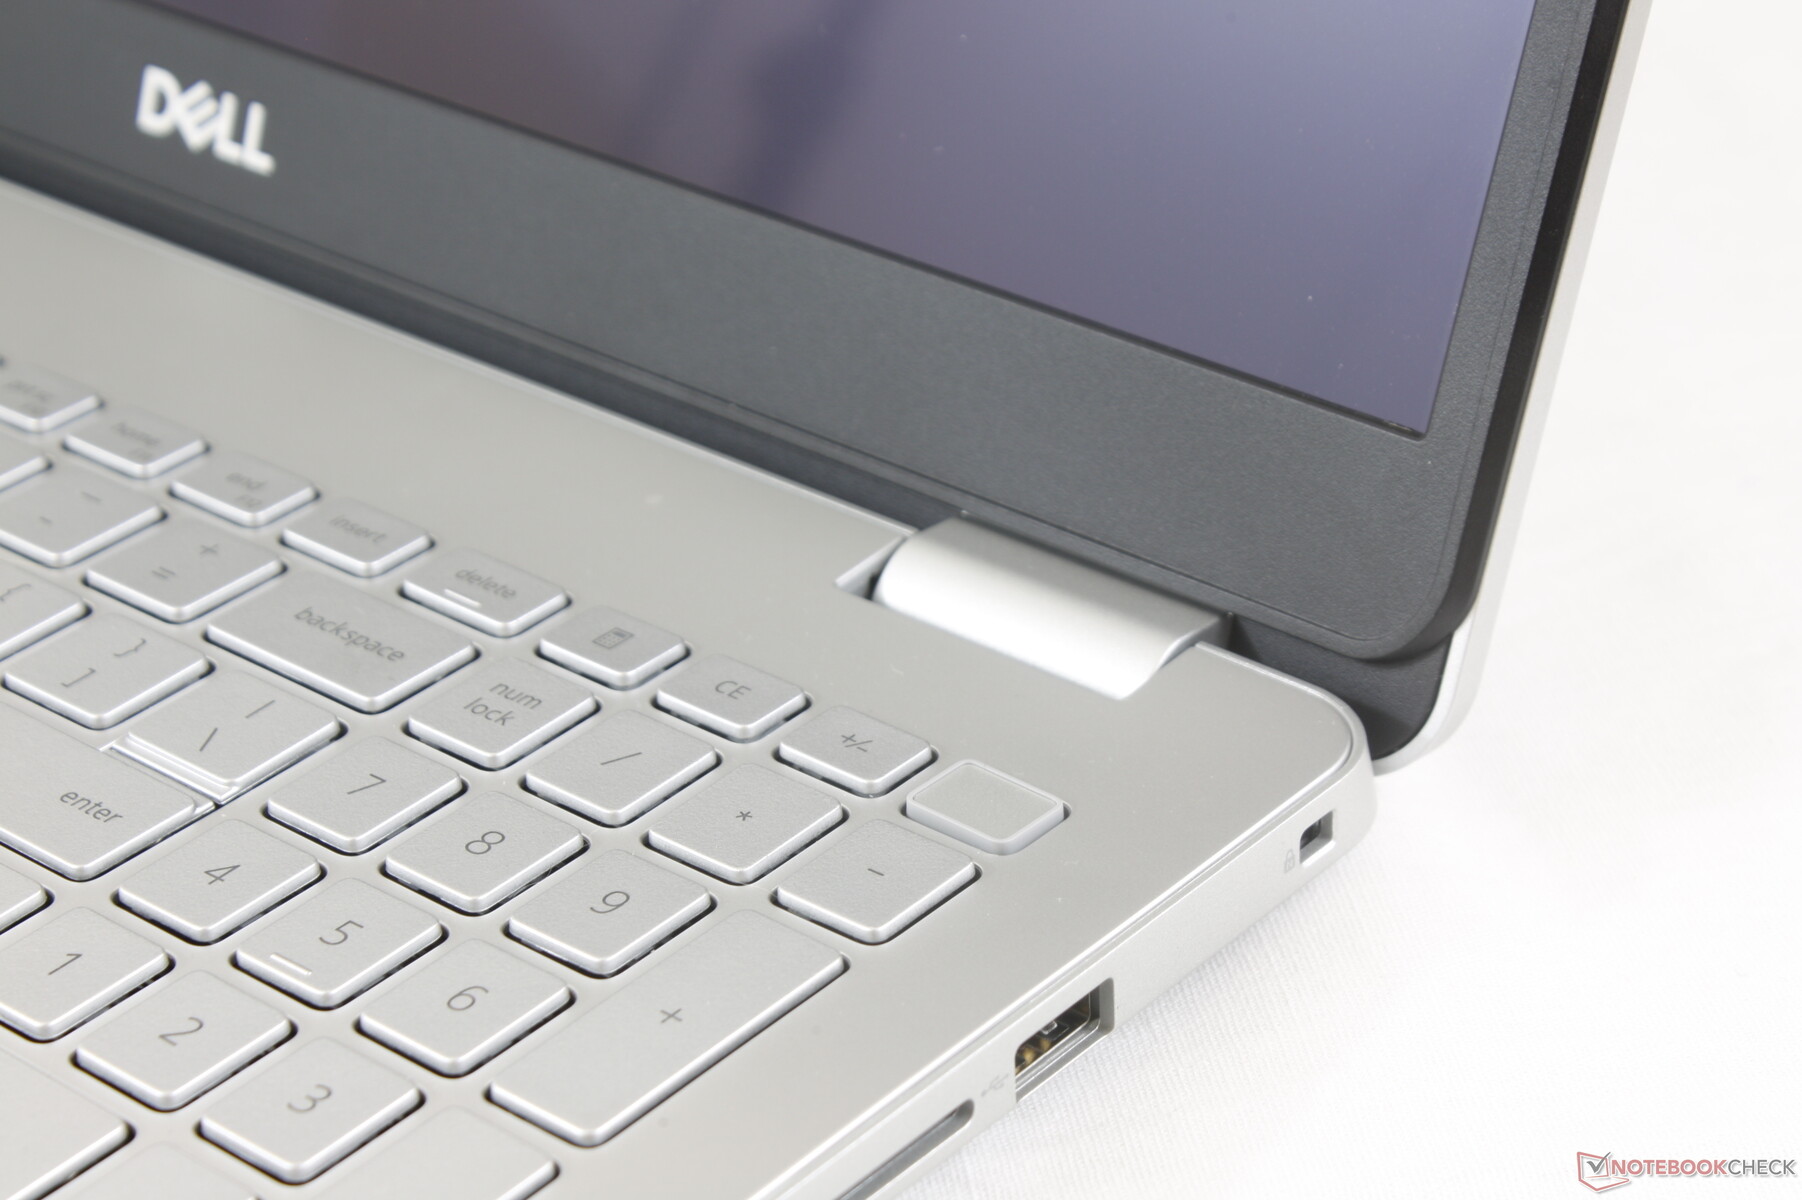 Apple laptop with fingerprint sensors